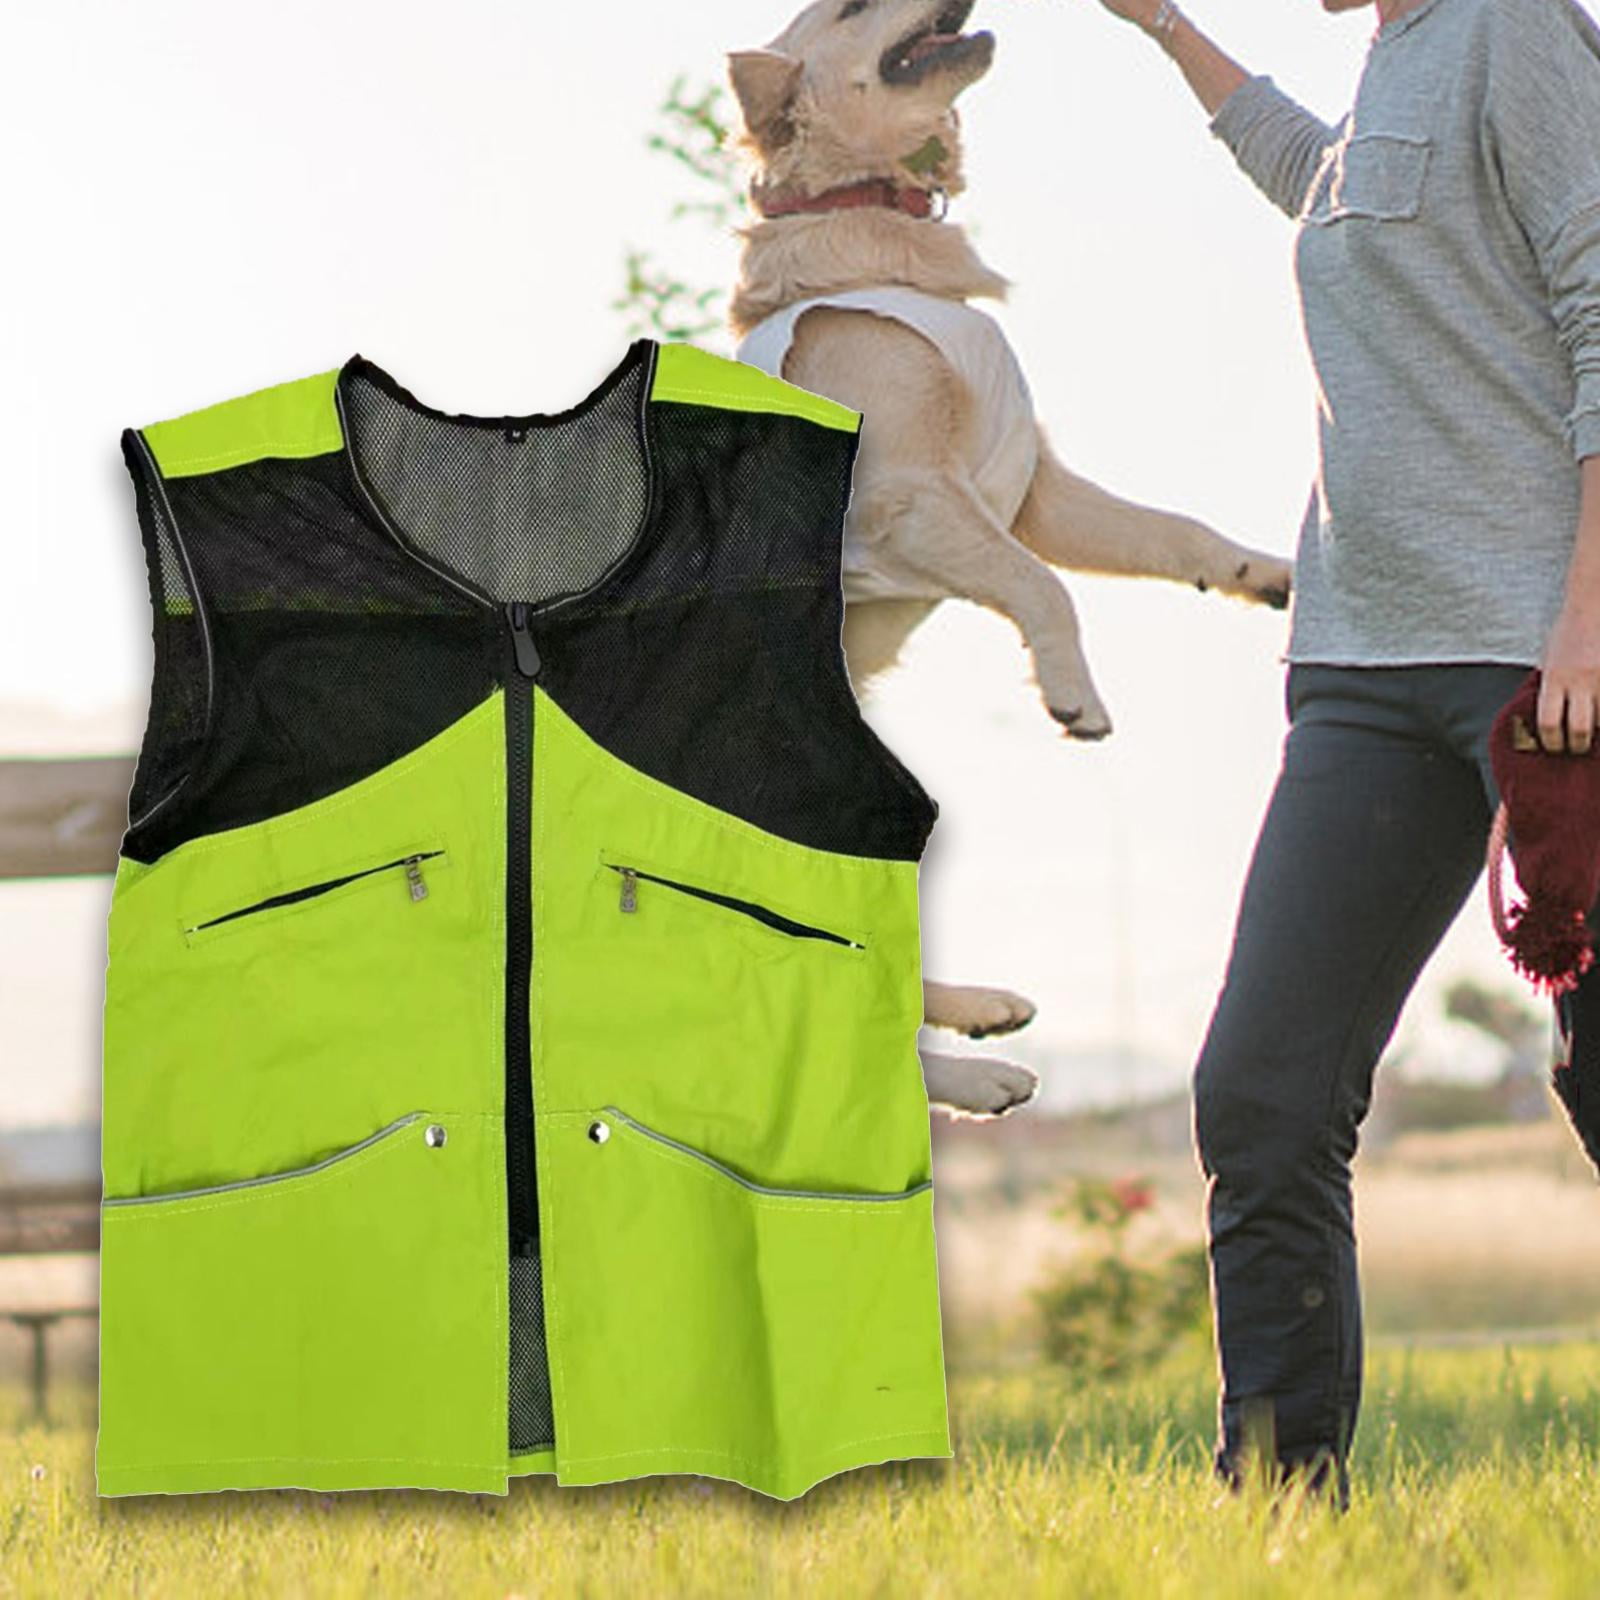 ProTrainer - A fantastically lightweight training vest for dog handlers